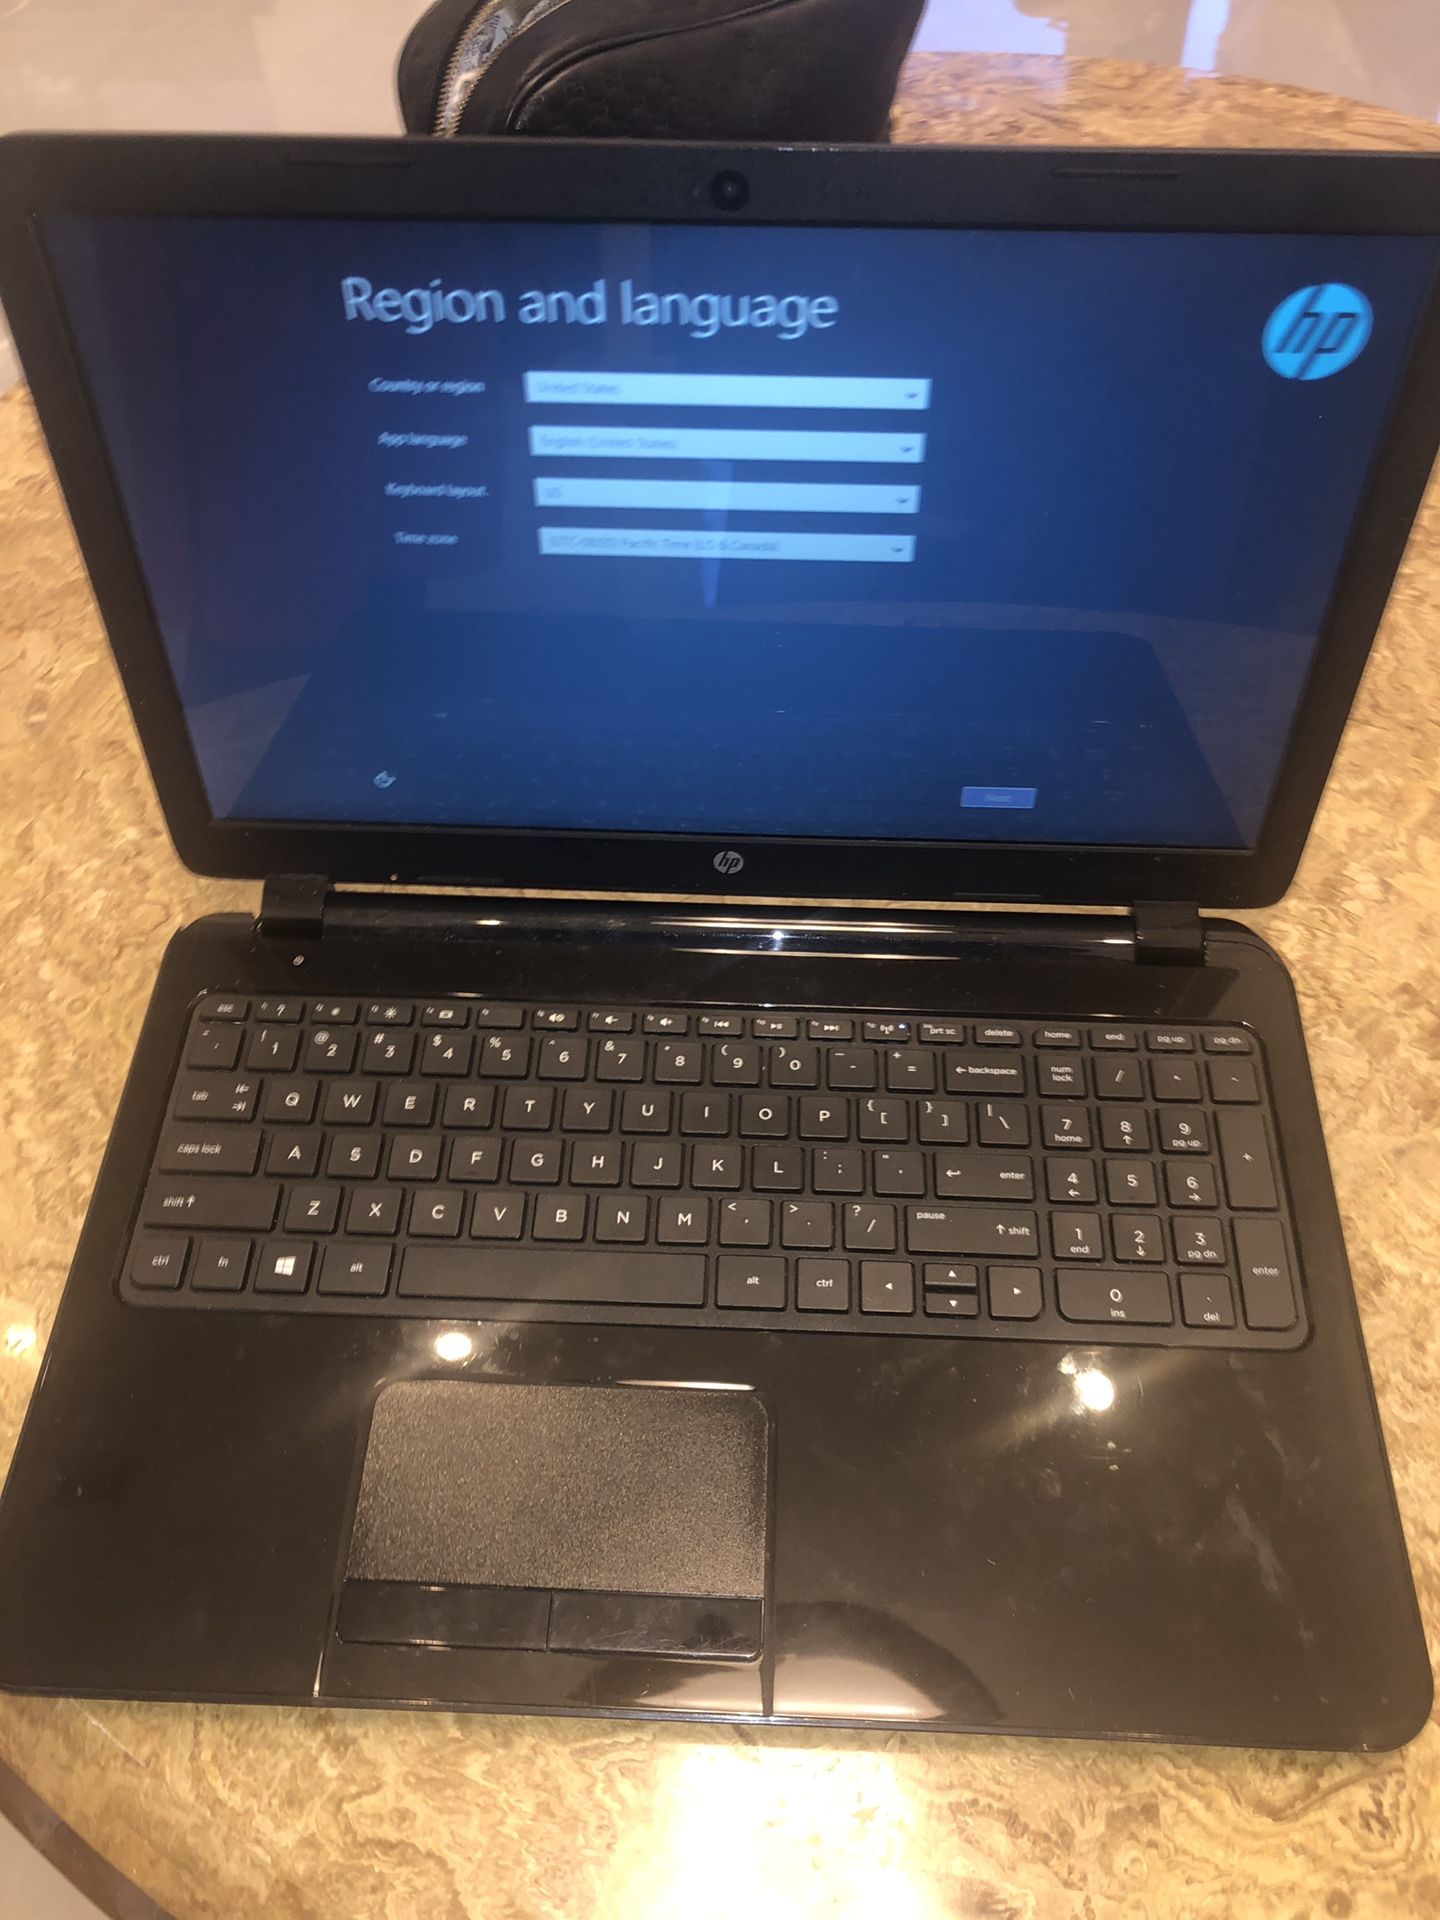 HP laptop model 15g-G020Dx